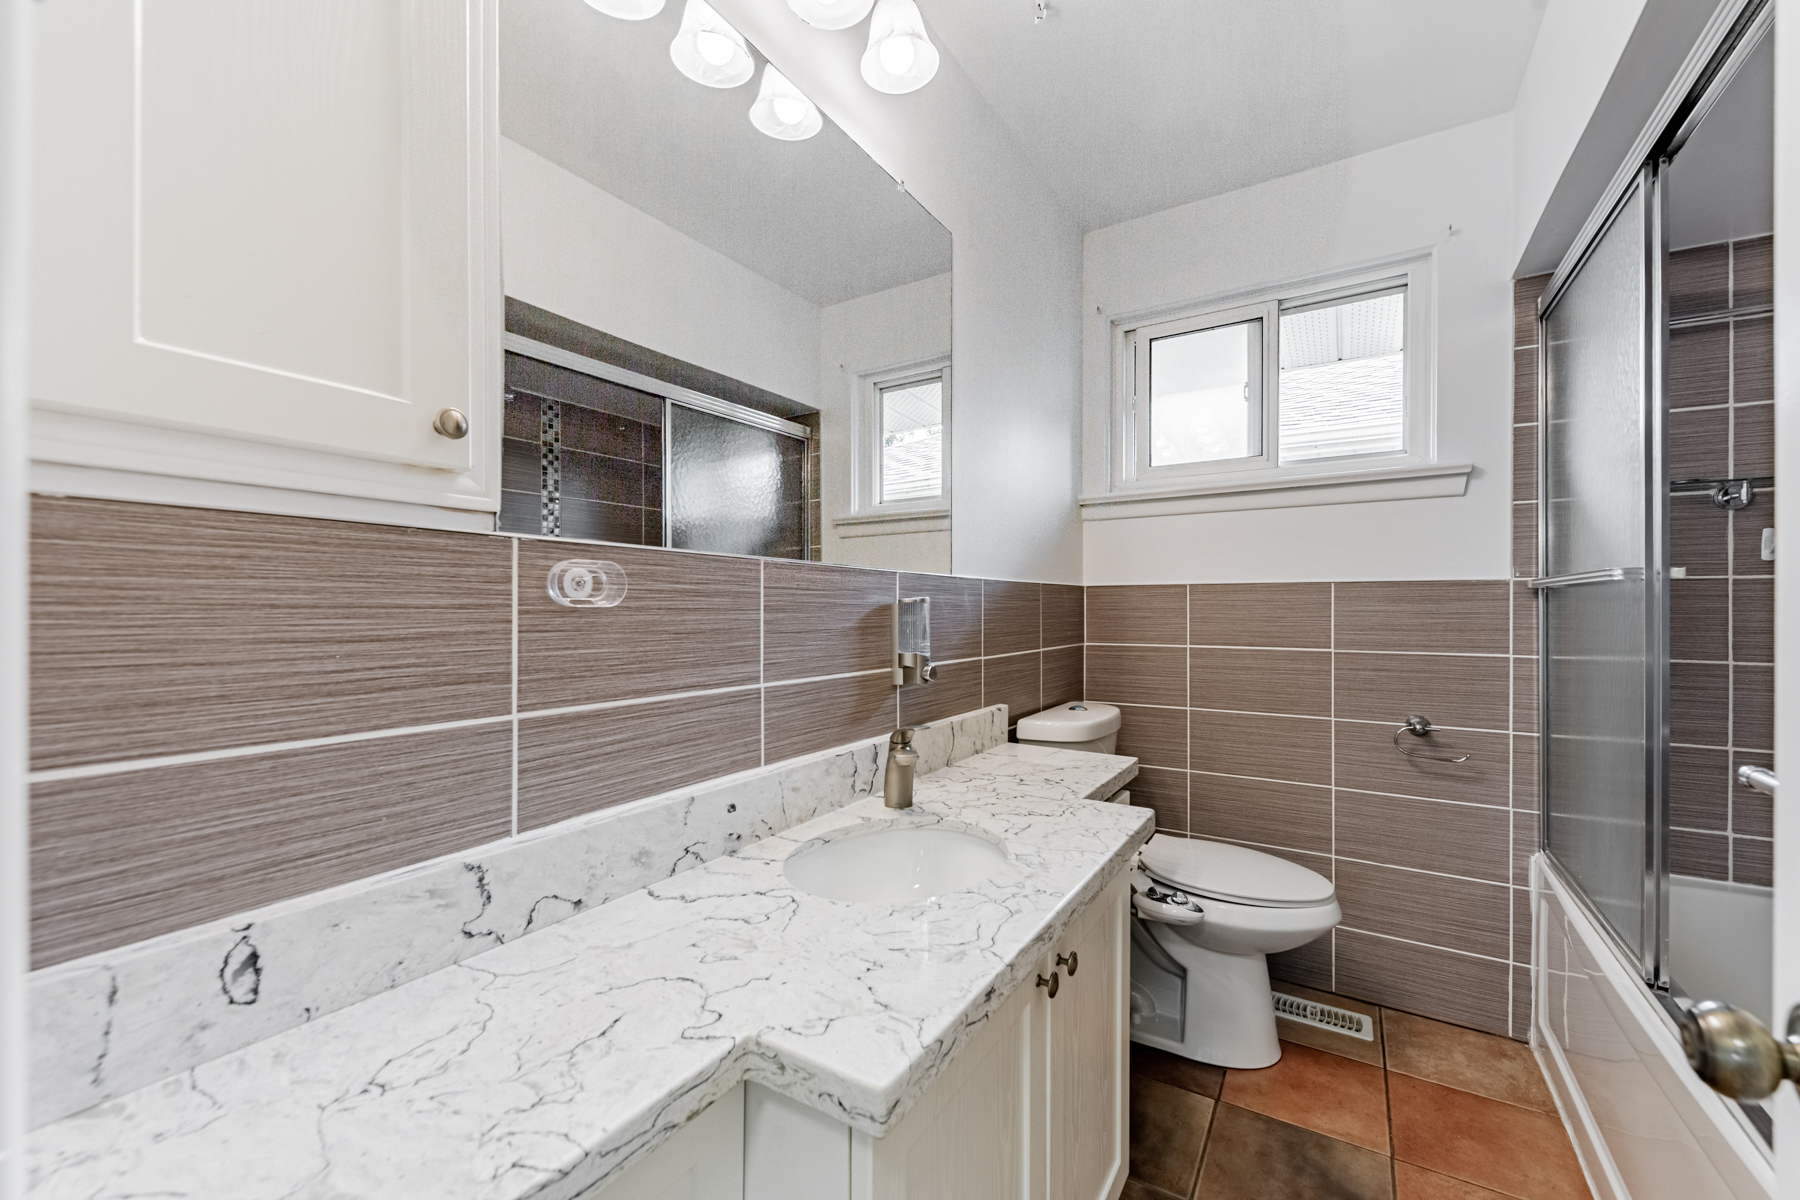 36 Earlton Rd 4-piece bathroom with long vanity, ceramic floors, and wide mirror.